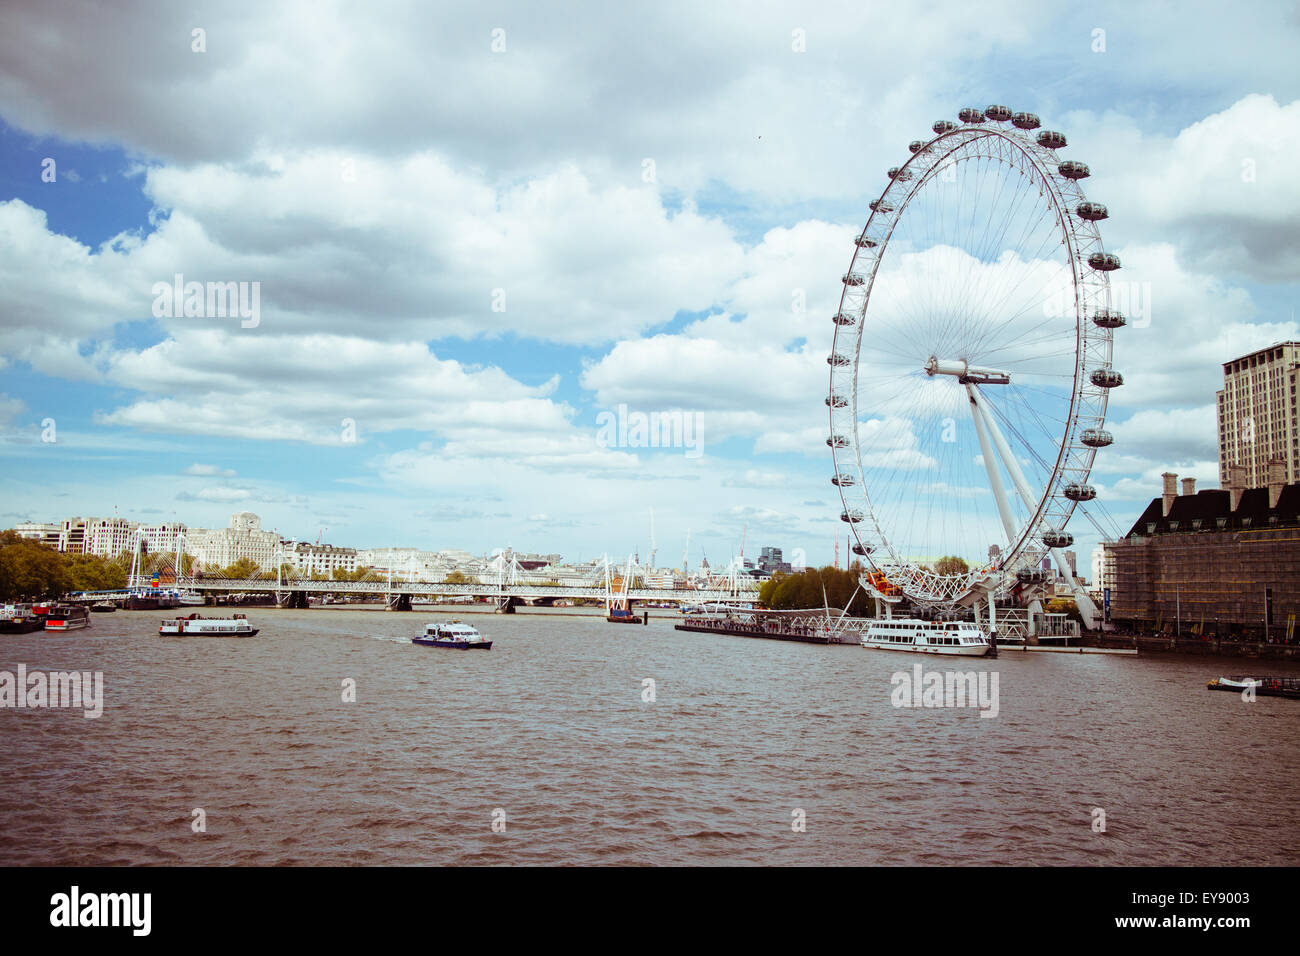 The London Eye, Millennium Wheel. Stock Photo